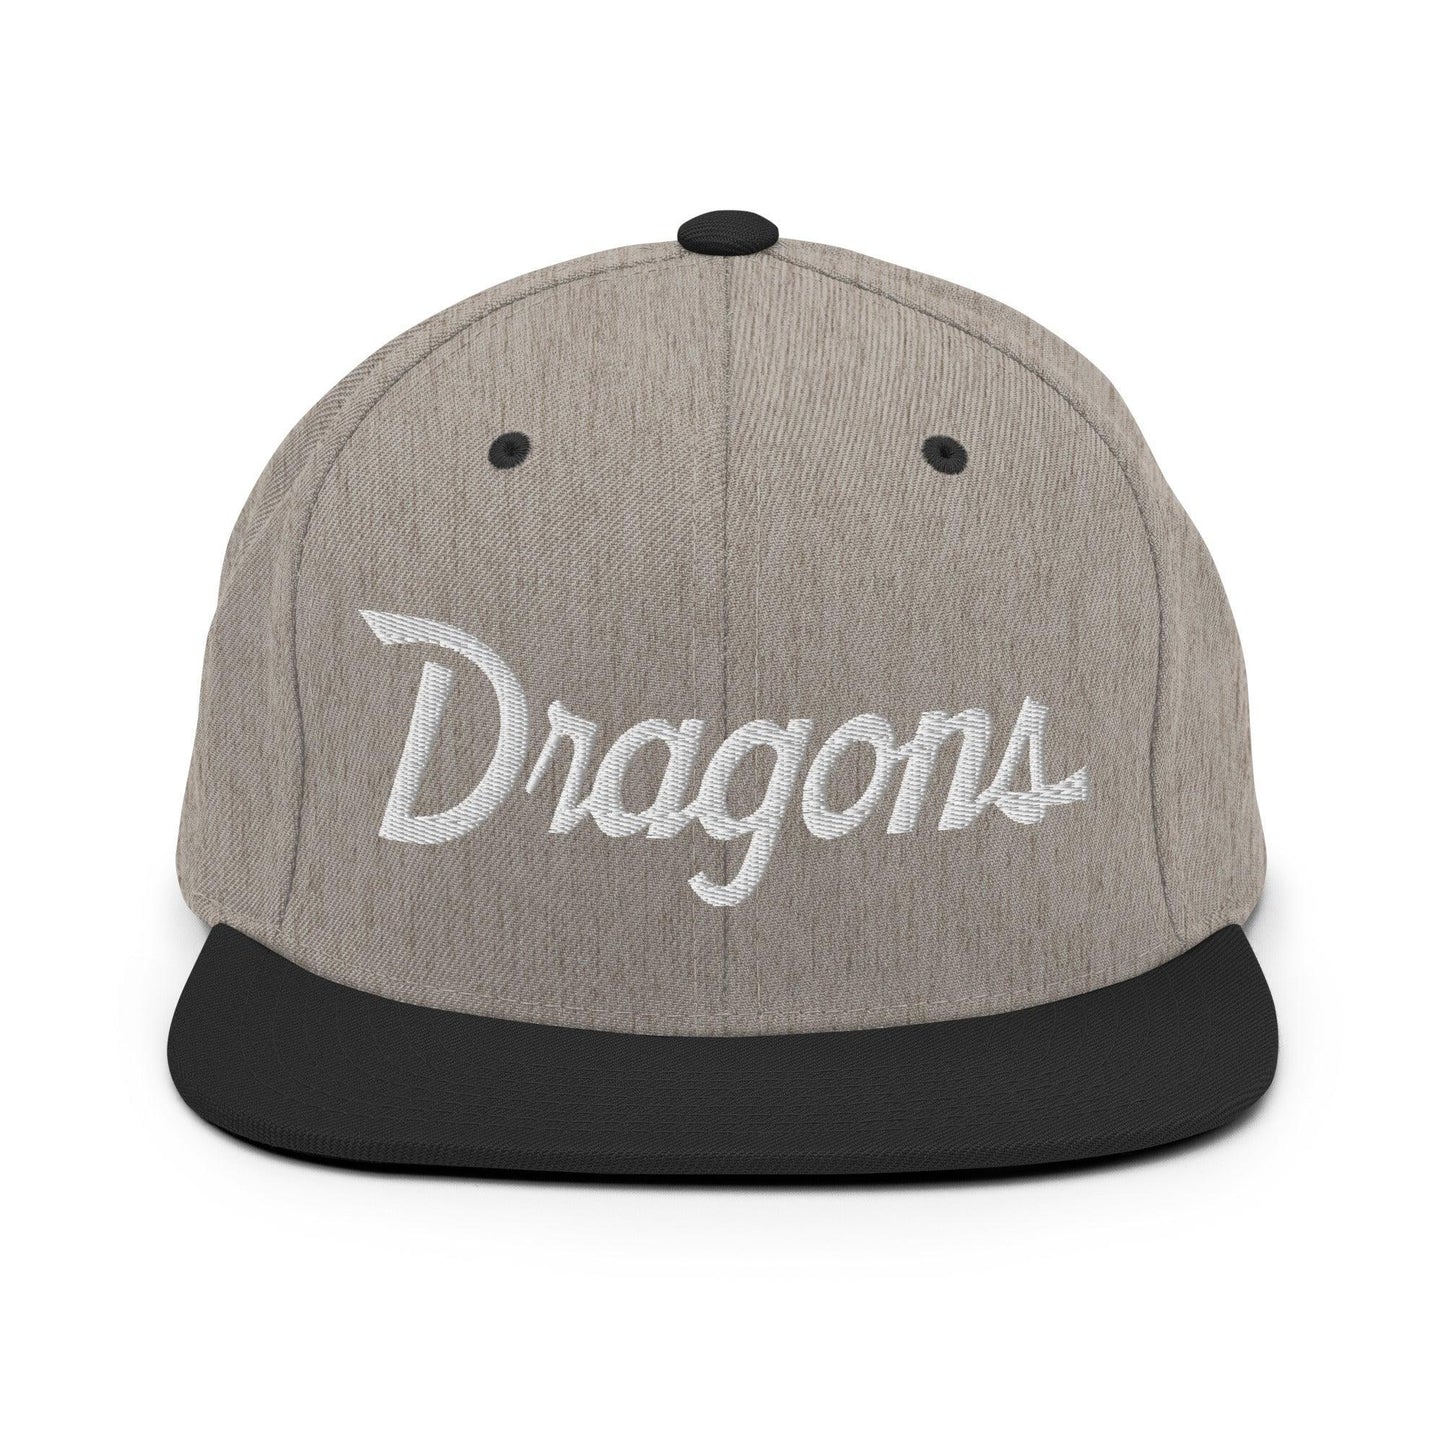 Dragons School Mascot Snapback Hat Heather/Black